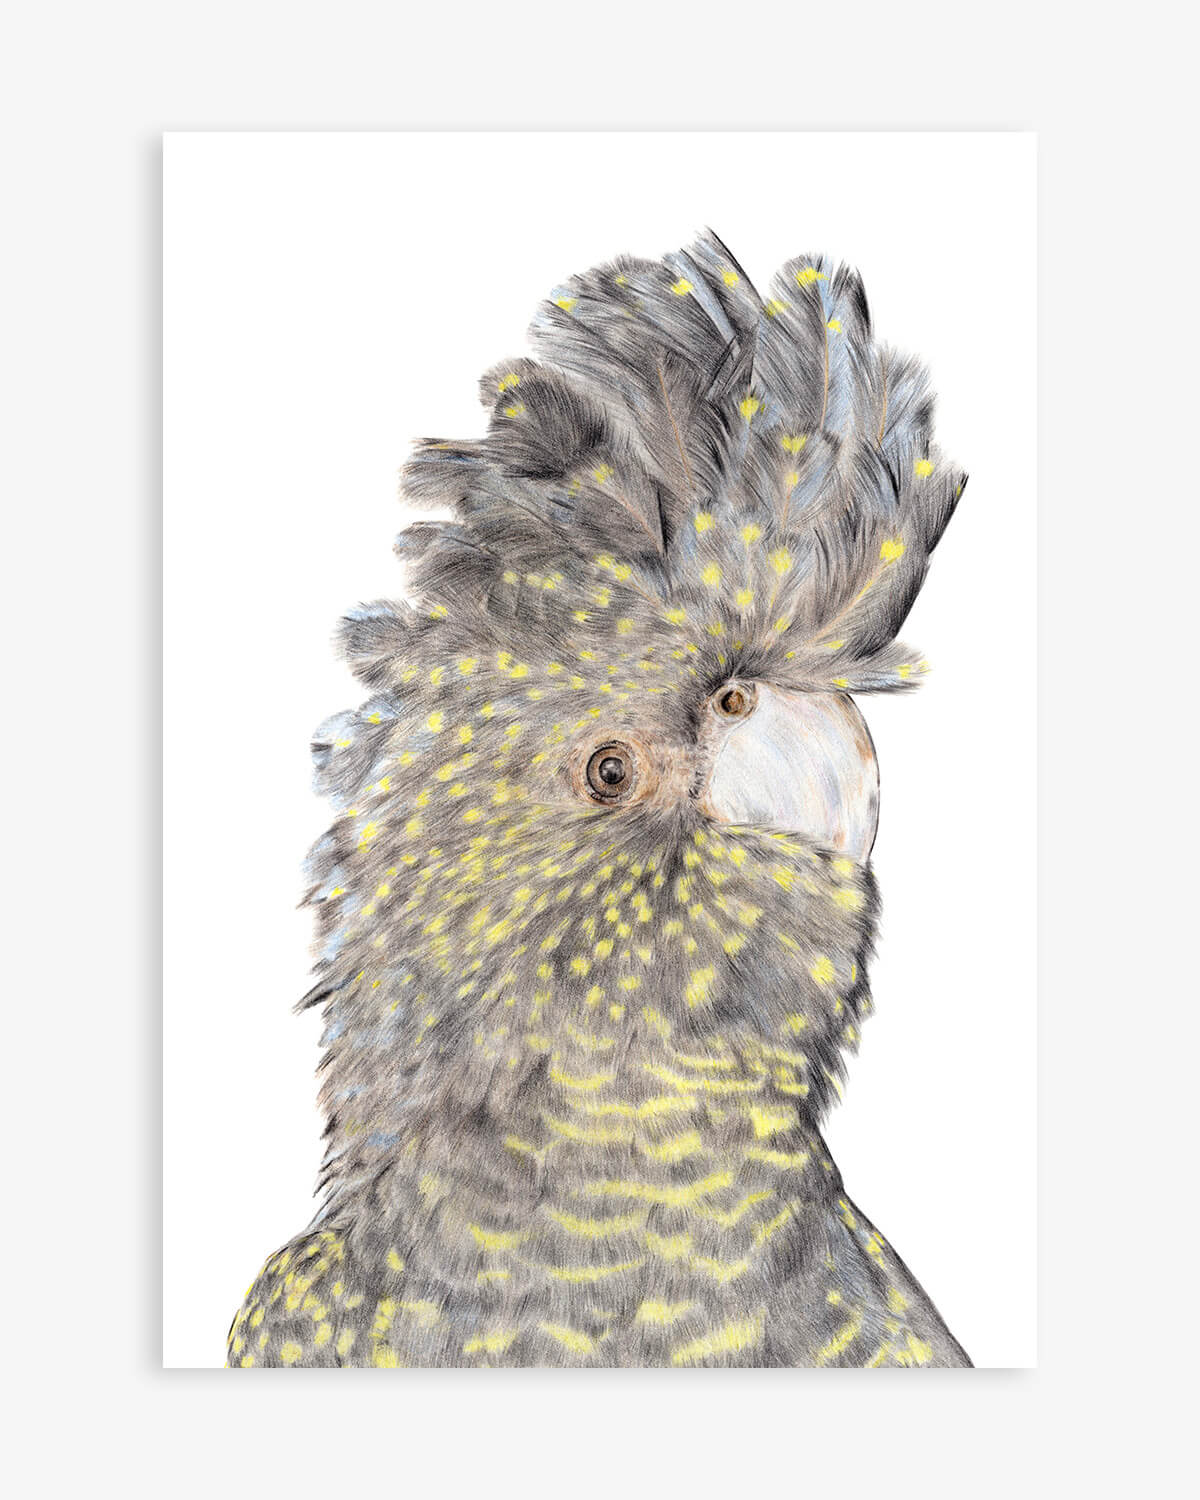 Black Cockatoo Australian bird artwork